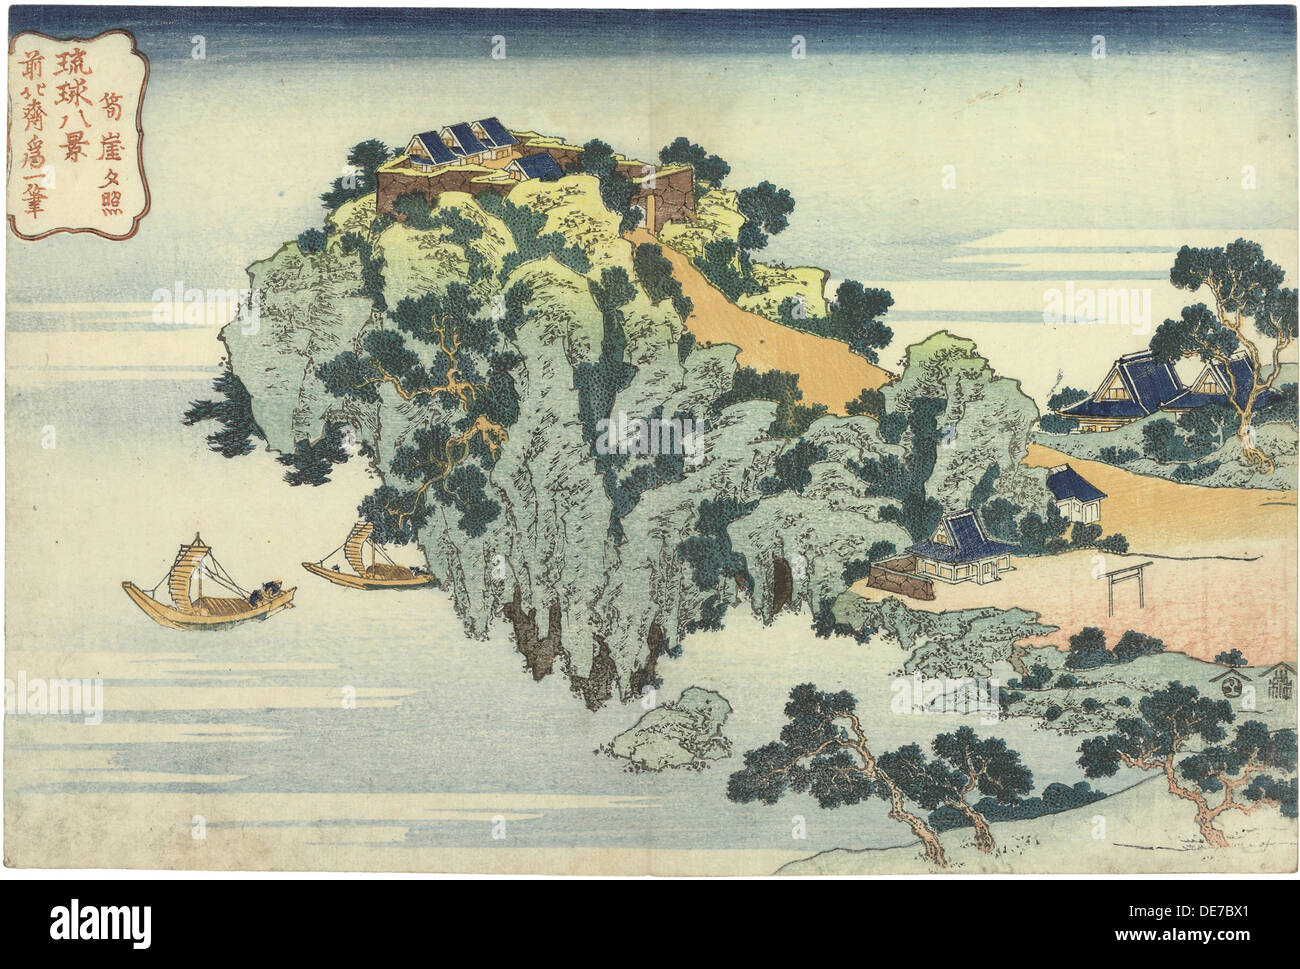 Jungai sekisho (bagliore di sera a Jungai). Dalla serie di otto viste delle isole Ryukyu. Artista: Hokusai, Katsushika (1760-1849) Foto Stock